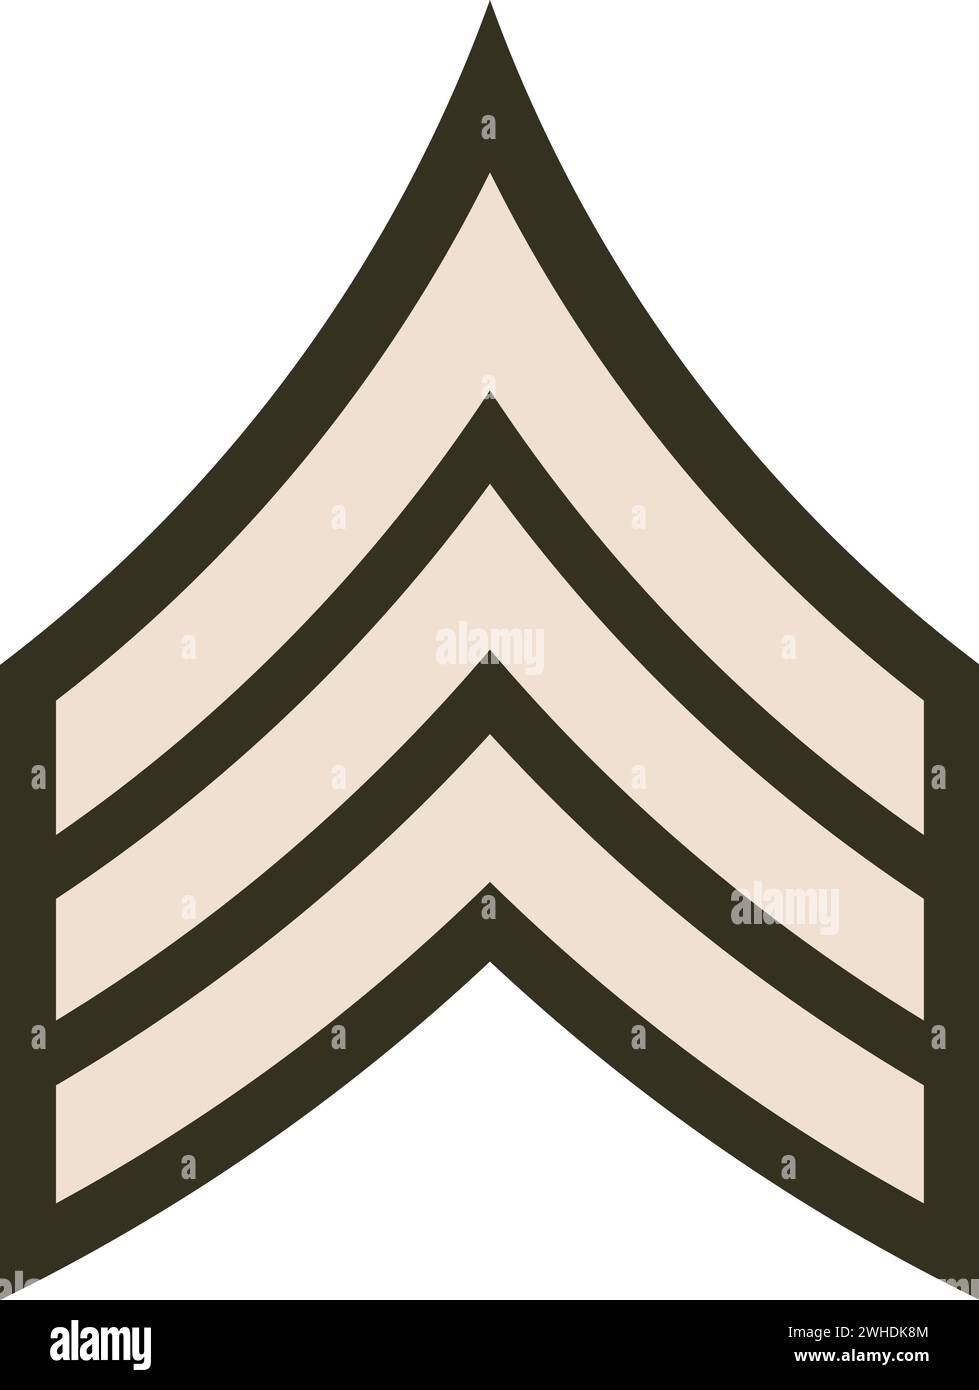 Schulterpolster Militär hat Rang-Insignien des US Army SERGEANT Stock Vektor